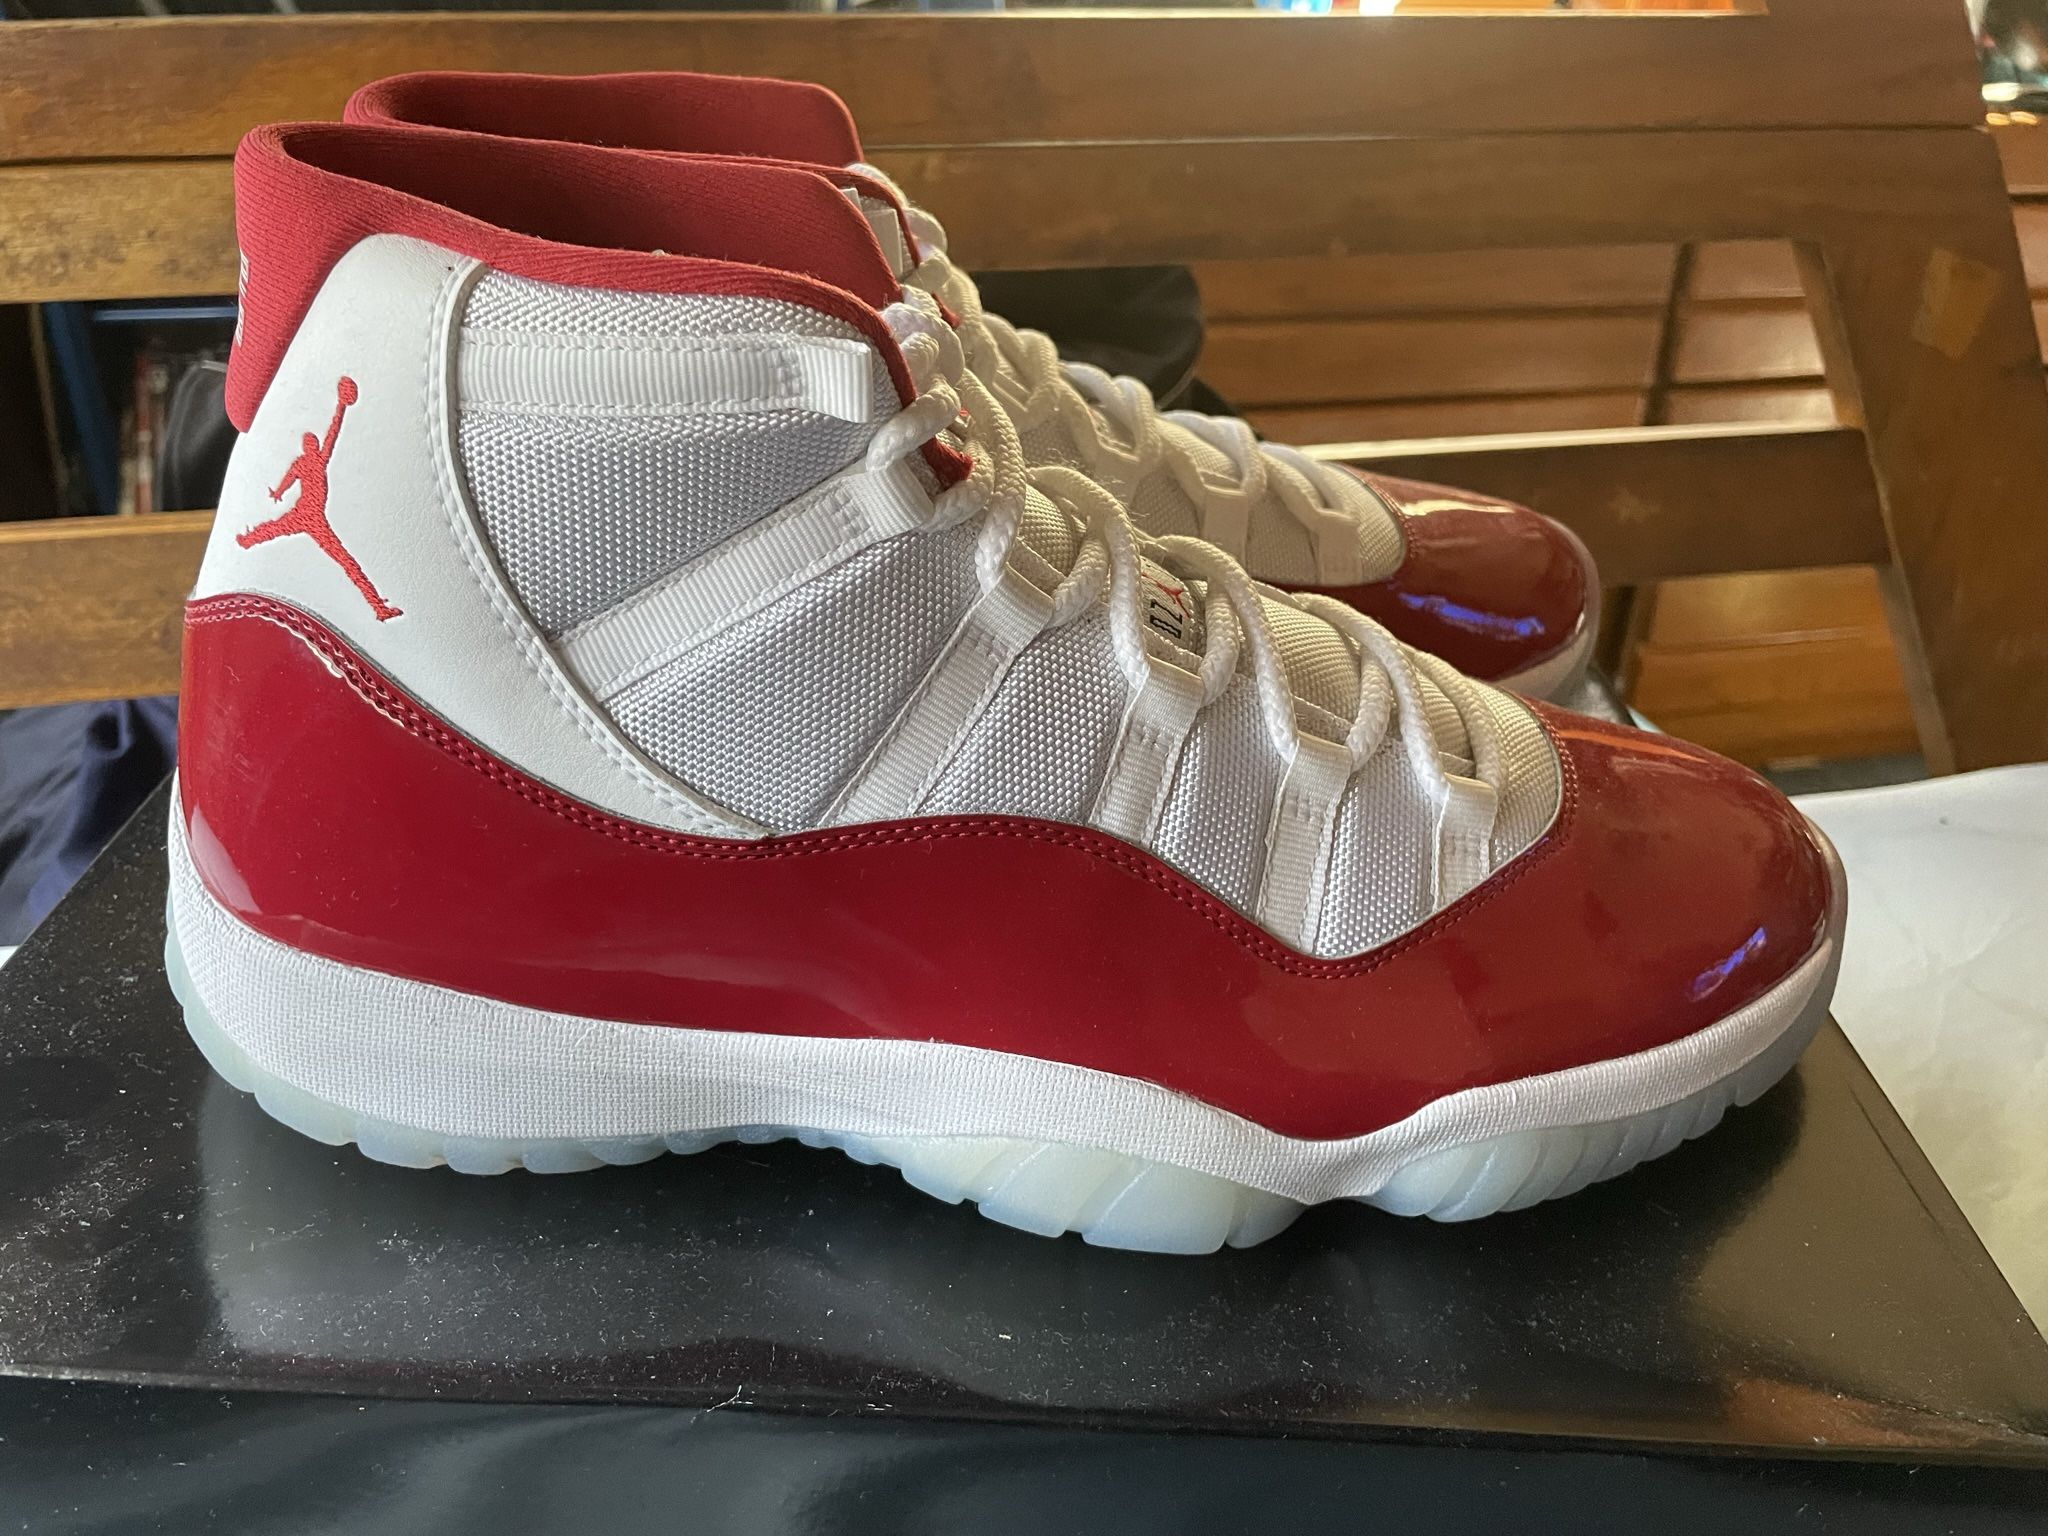 Jordan 11 Cherry Red Size 13